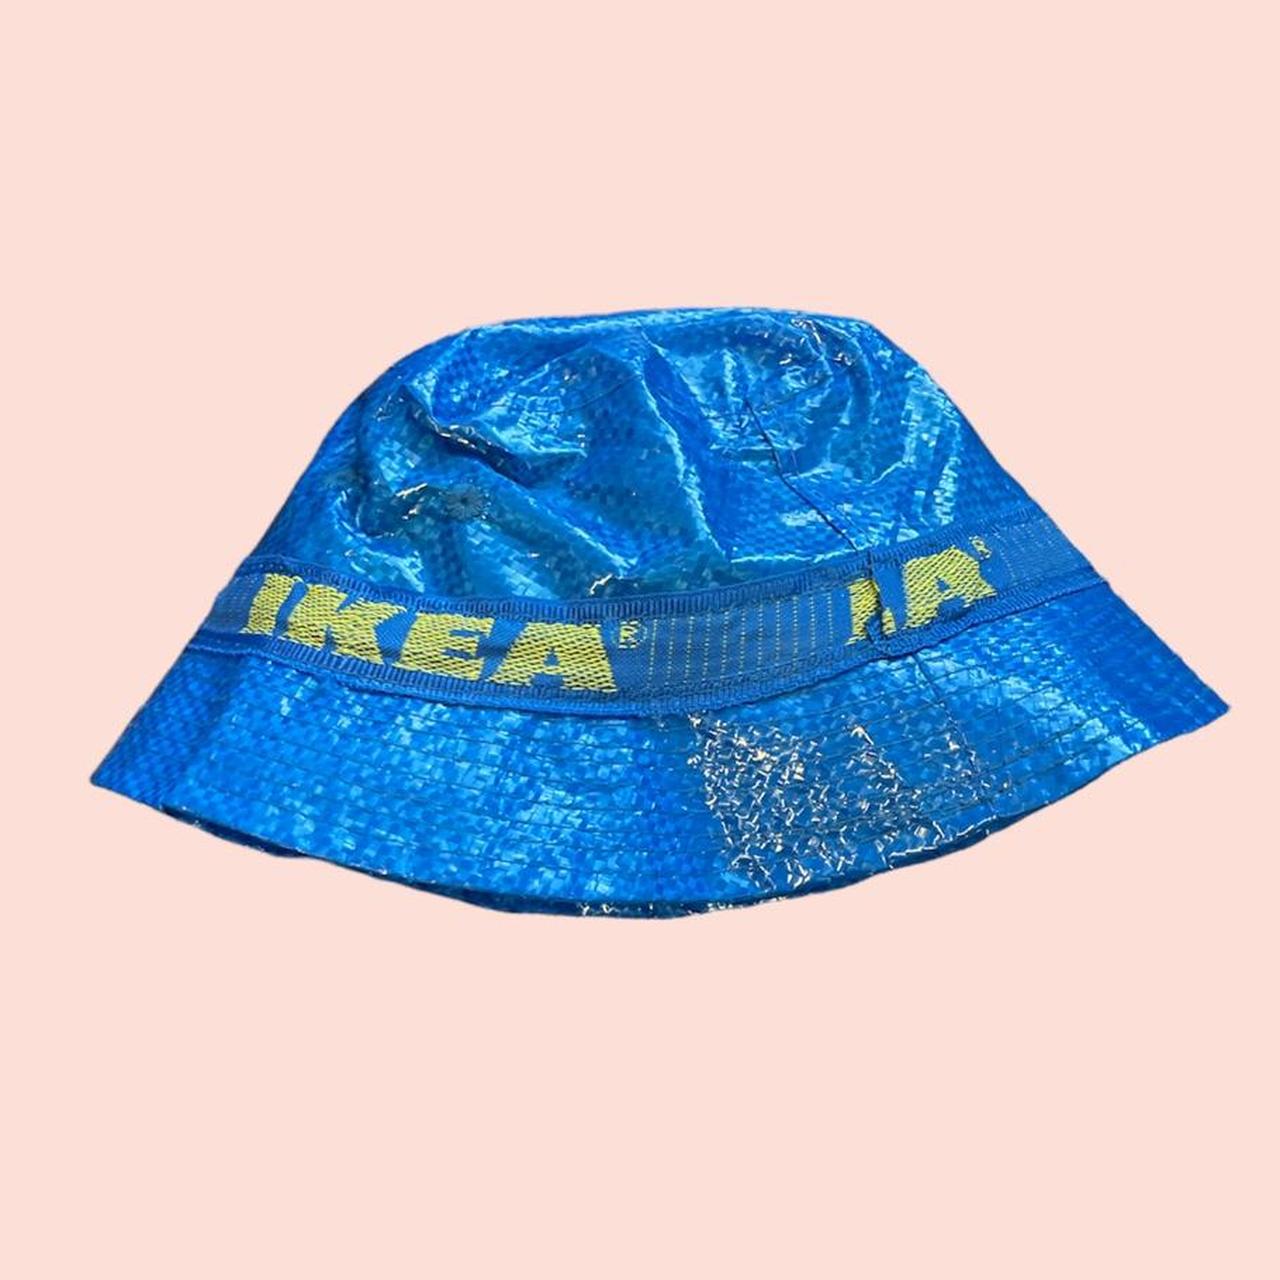 Product Image 1 - ikea bucket hat
never worn 

🌟PRICE